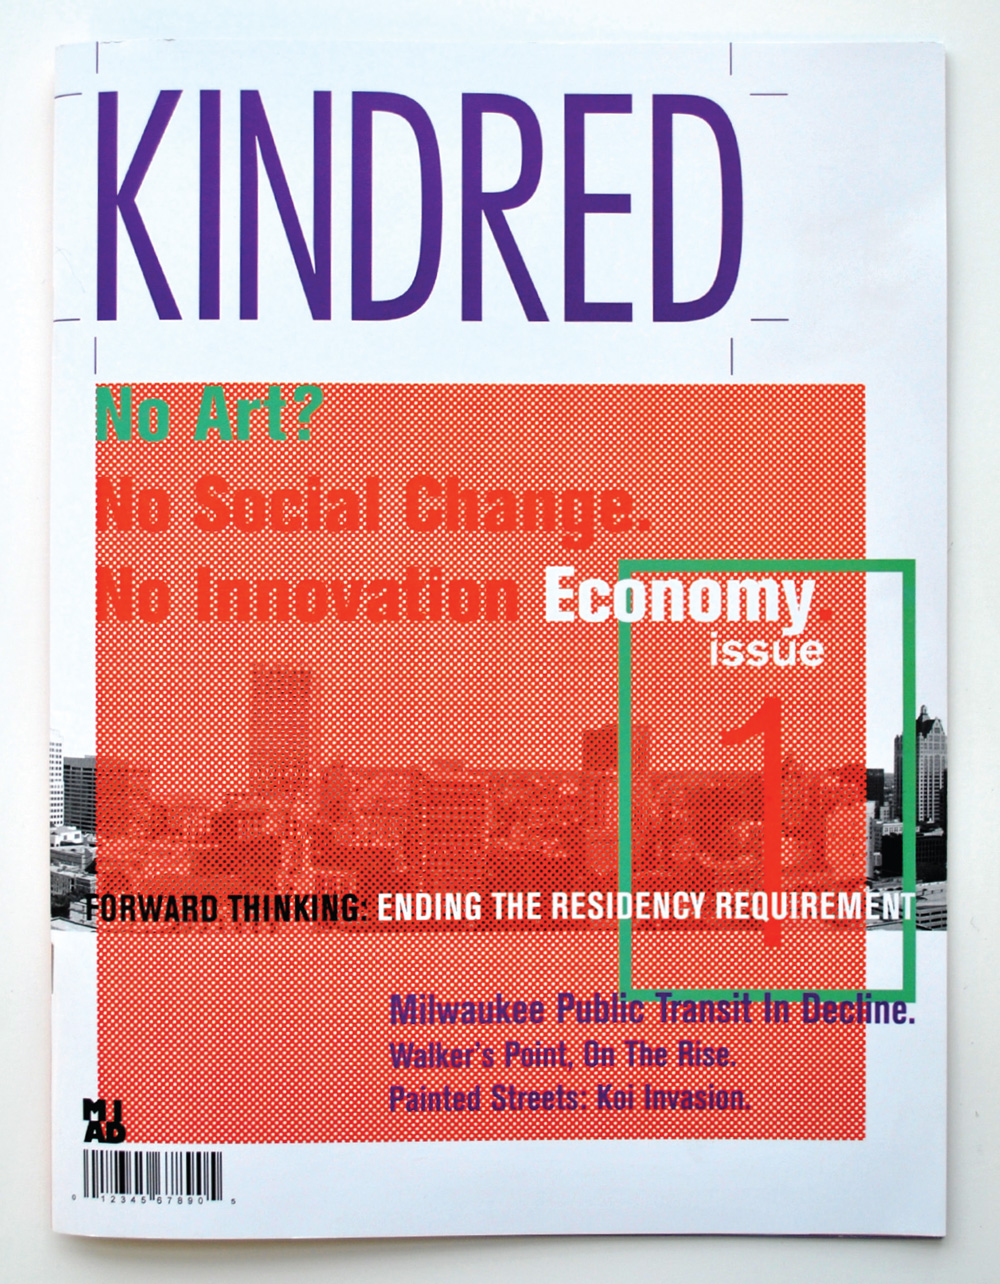 Kindred Magazine Cover